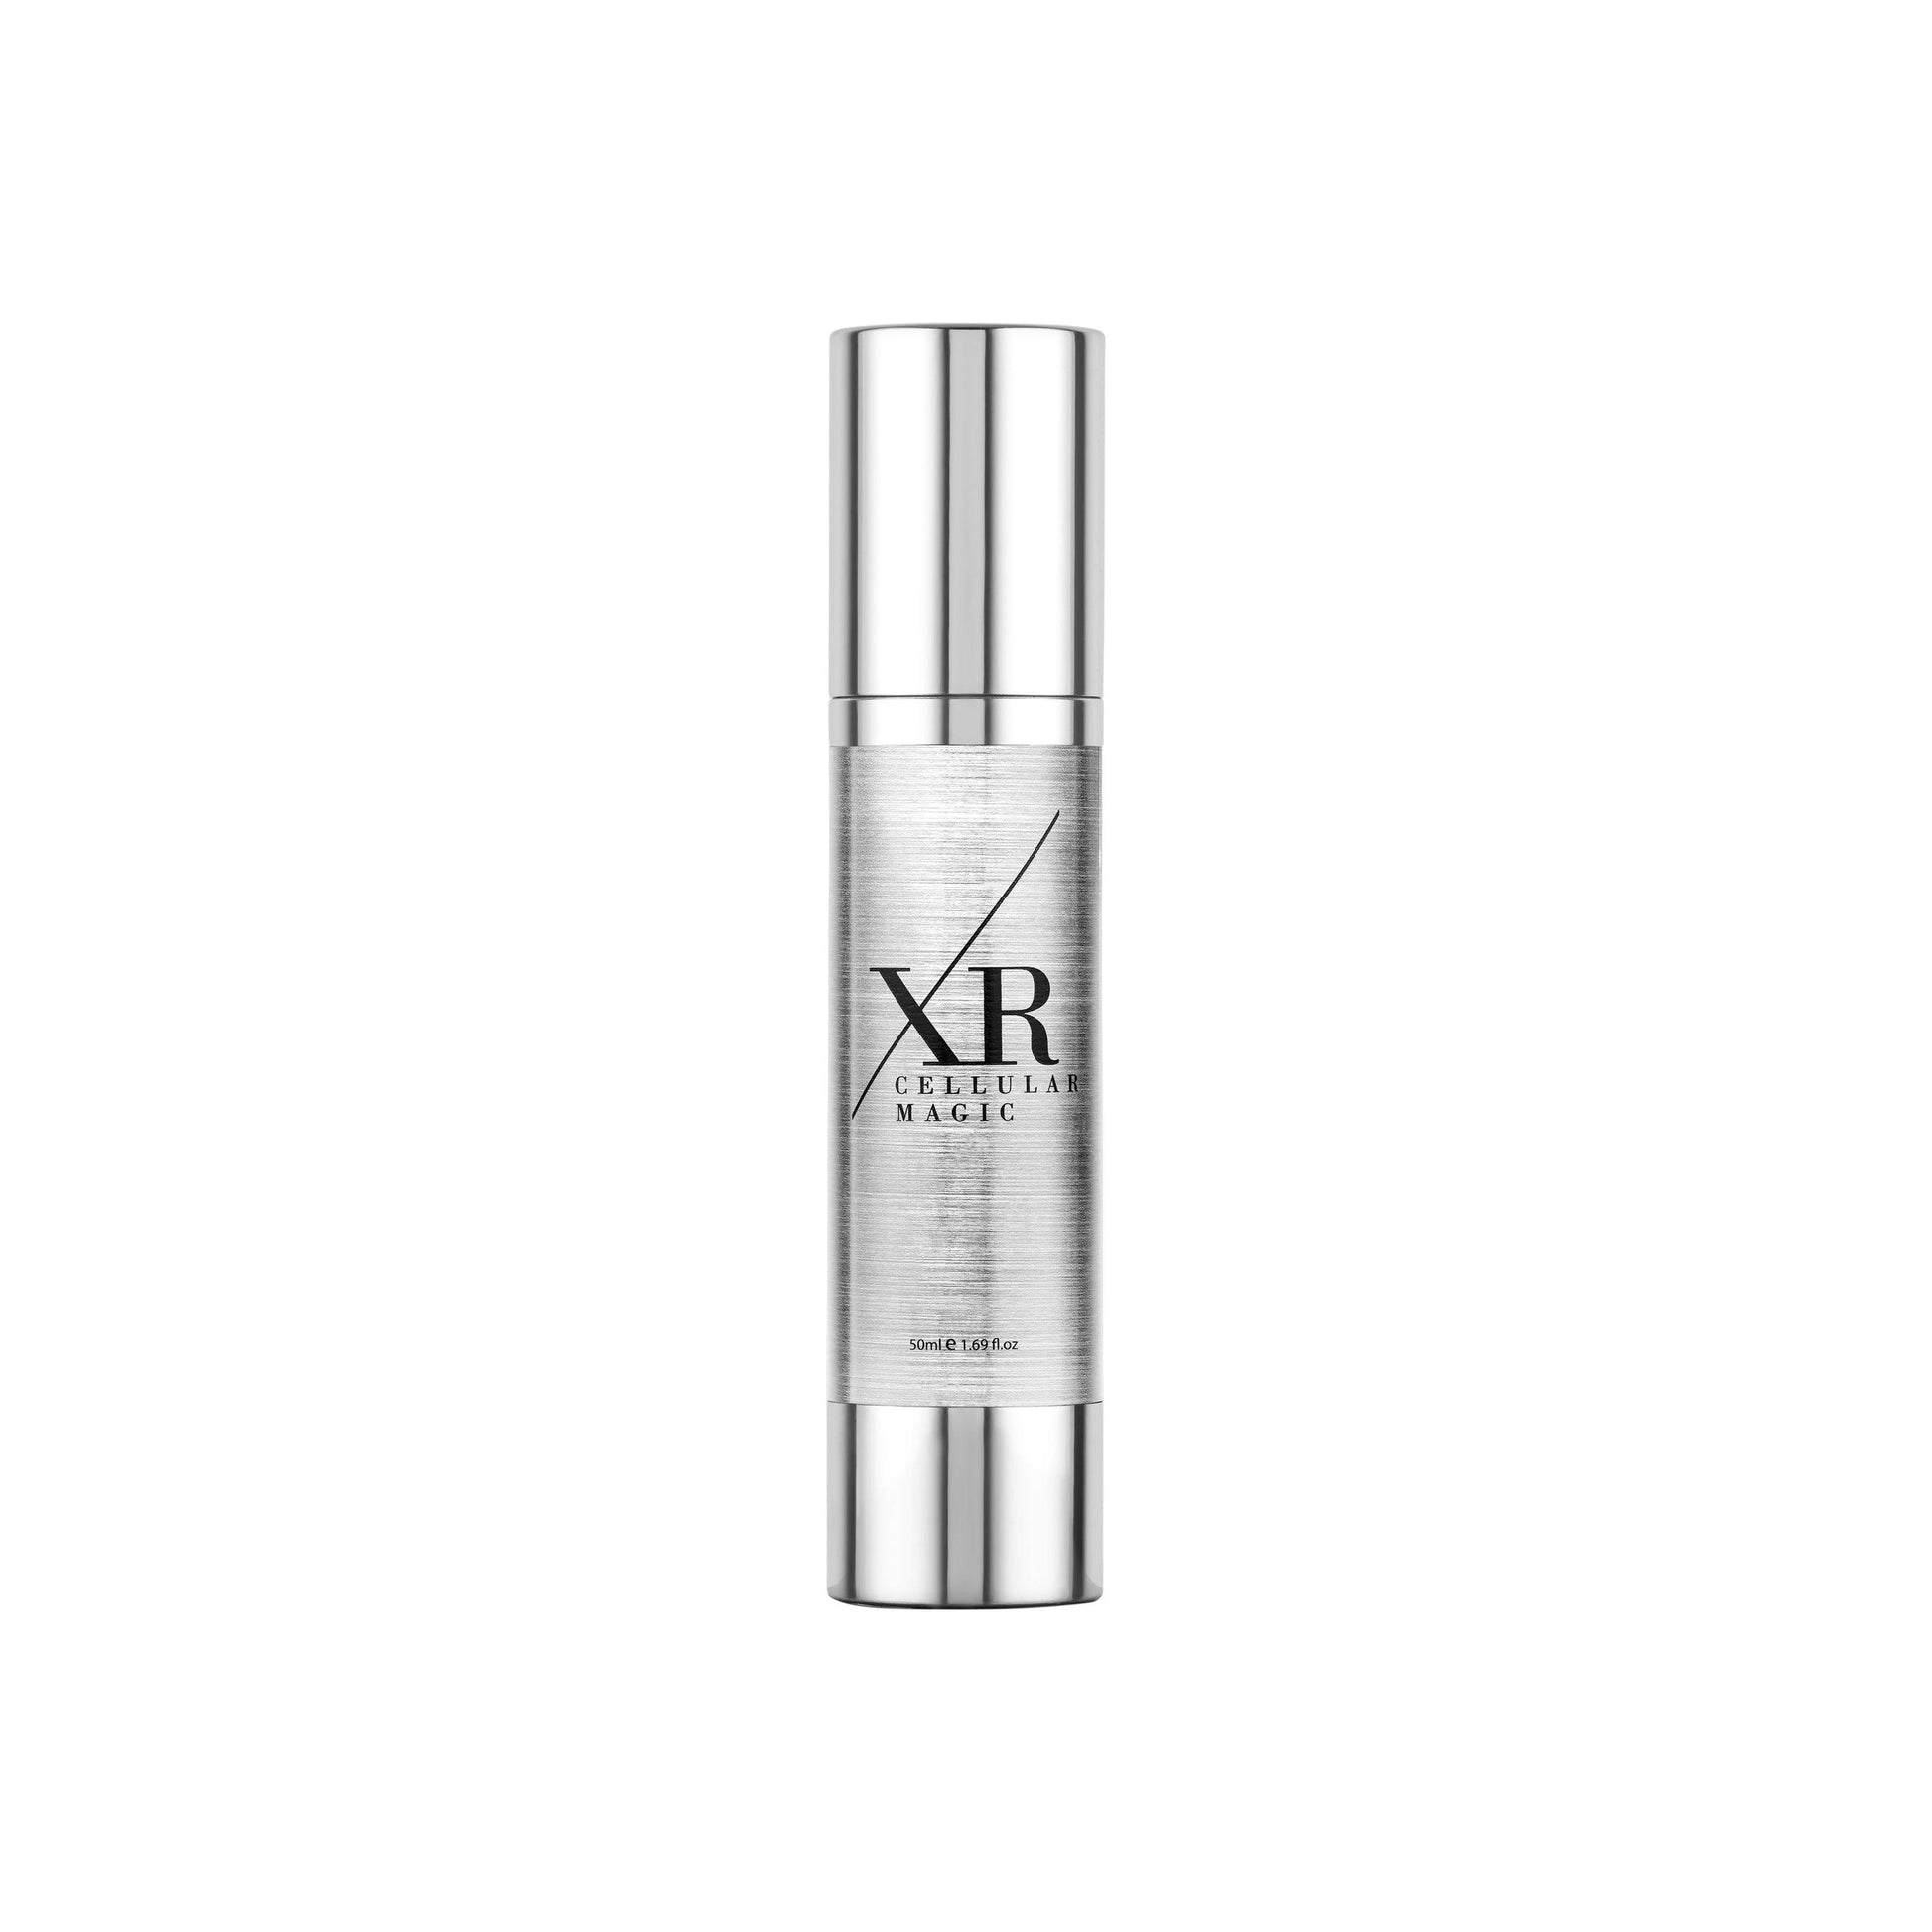 XR Cellular Magic Airless - MCCM Medical Cosmetics